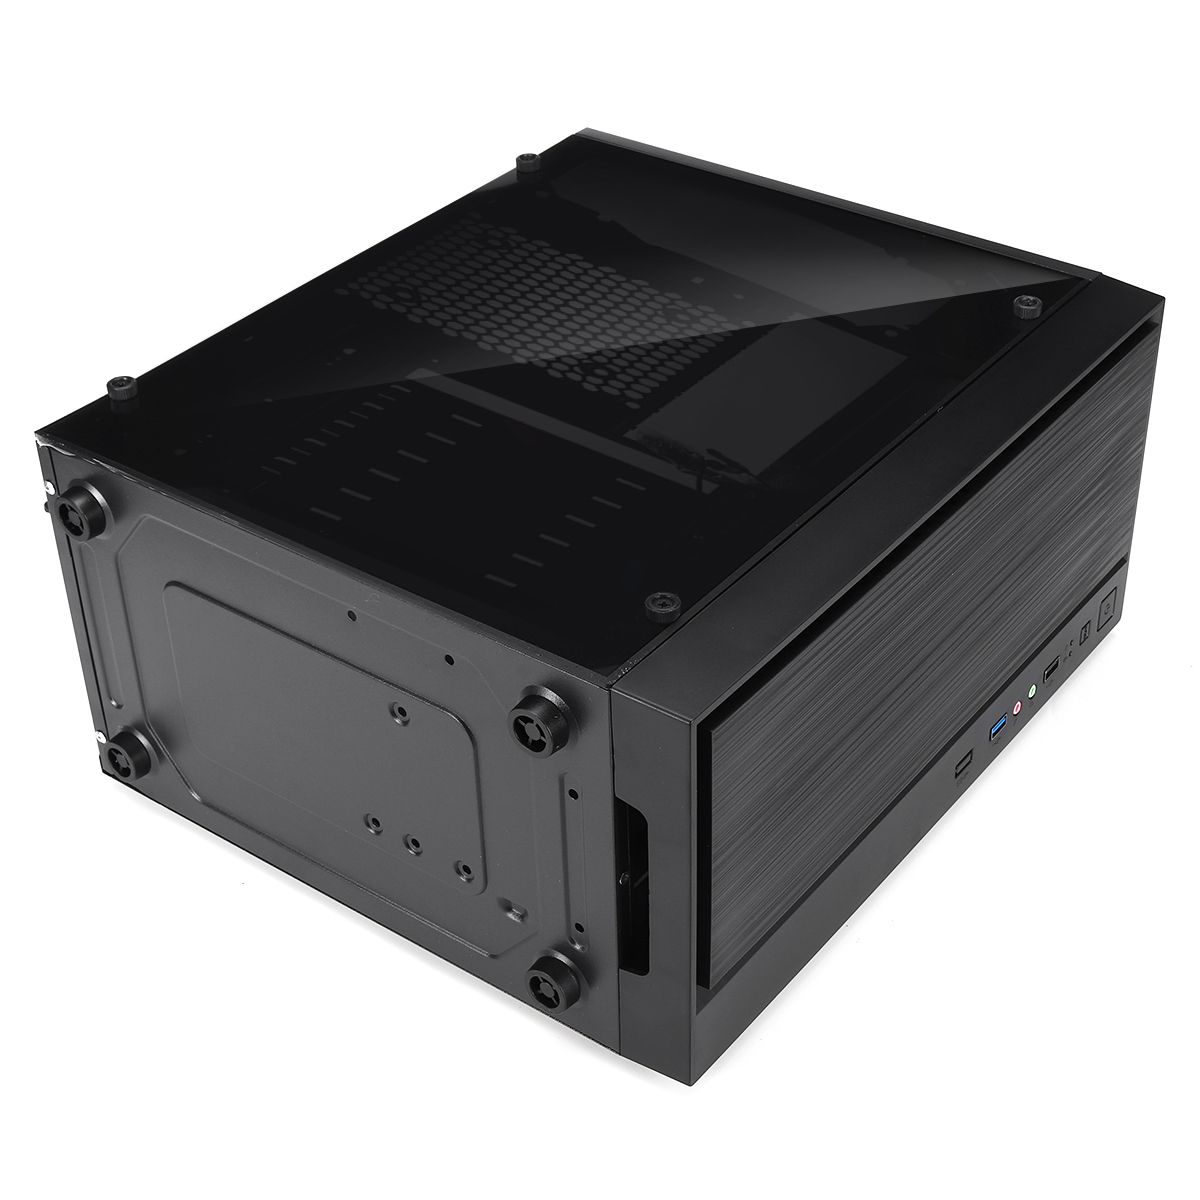 M-ATX--Mini-ITX-Computer-Gaming-PC-Case-RGB-Cooling-Fan-USB-Audio-Interface-with-Light-Bar-1627169